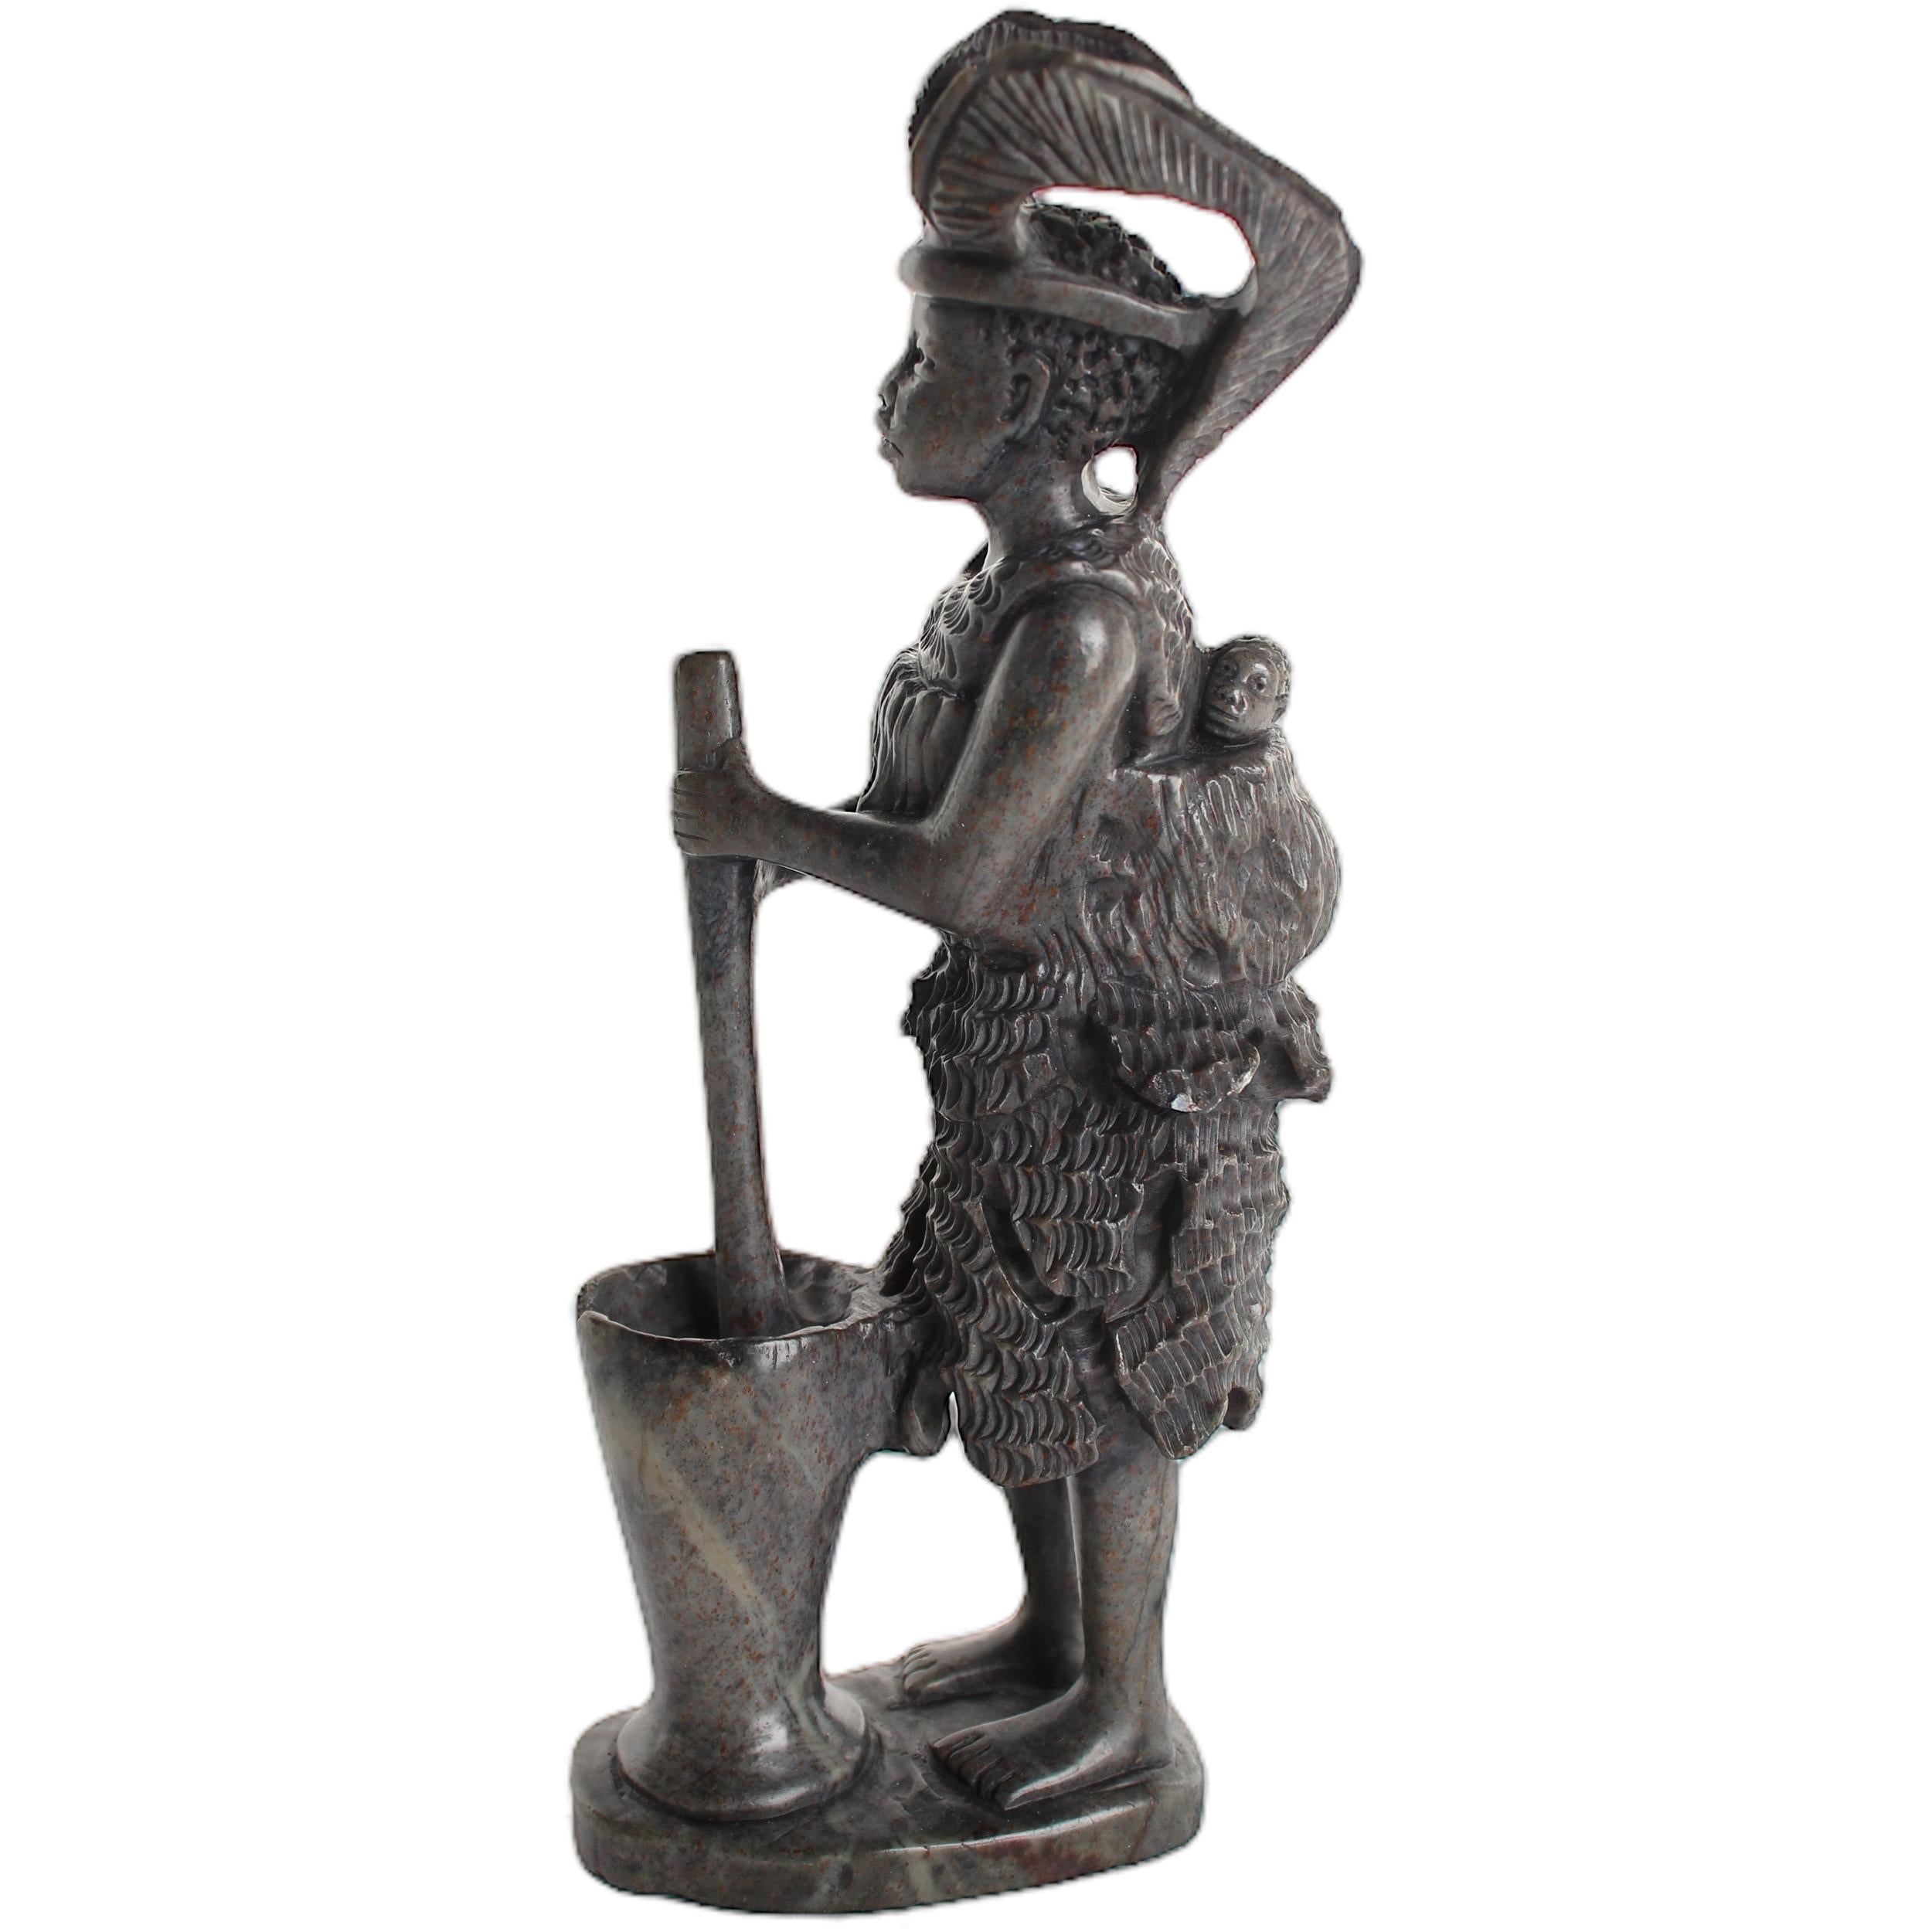 Shona Tribe Serpentine Stone Warrior Figure ~11.4" Tall